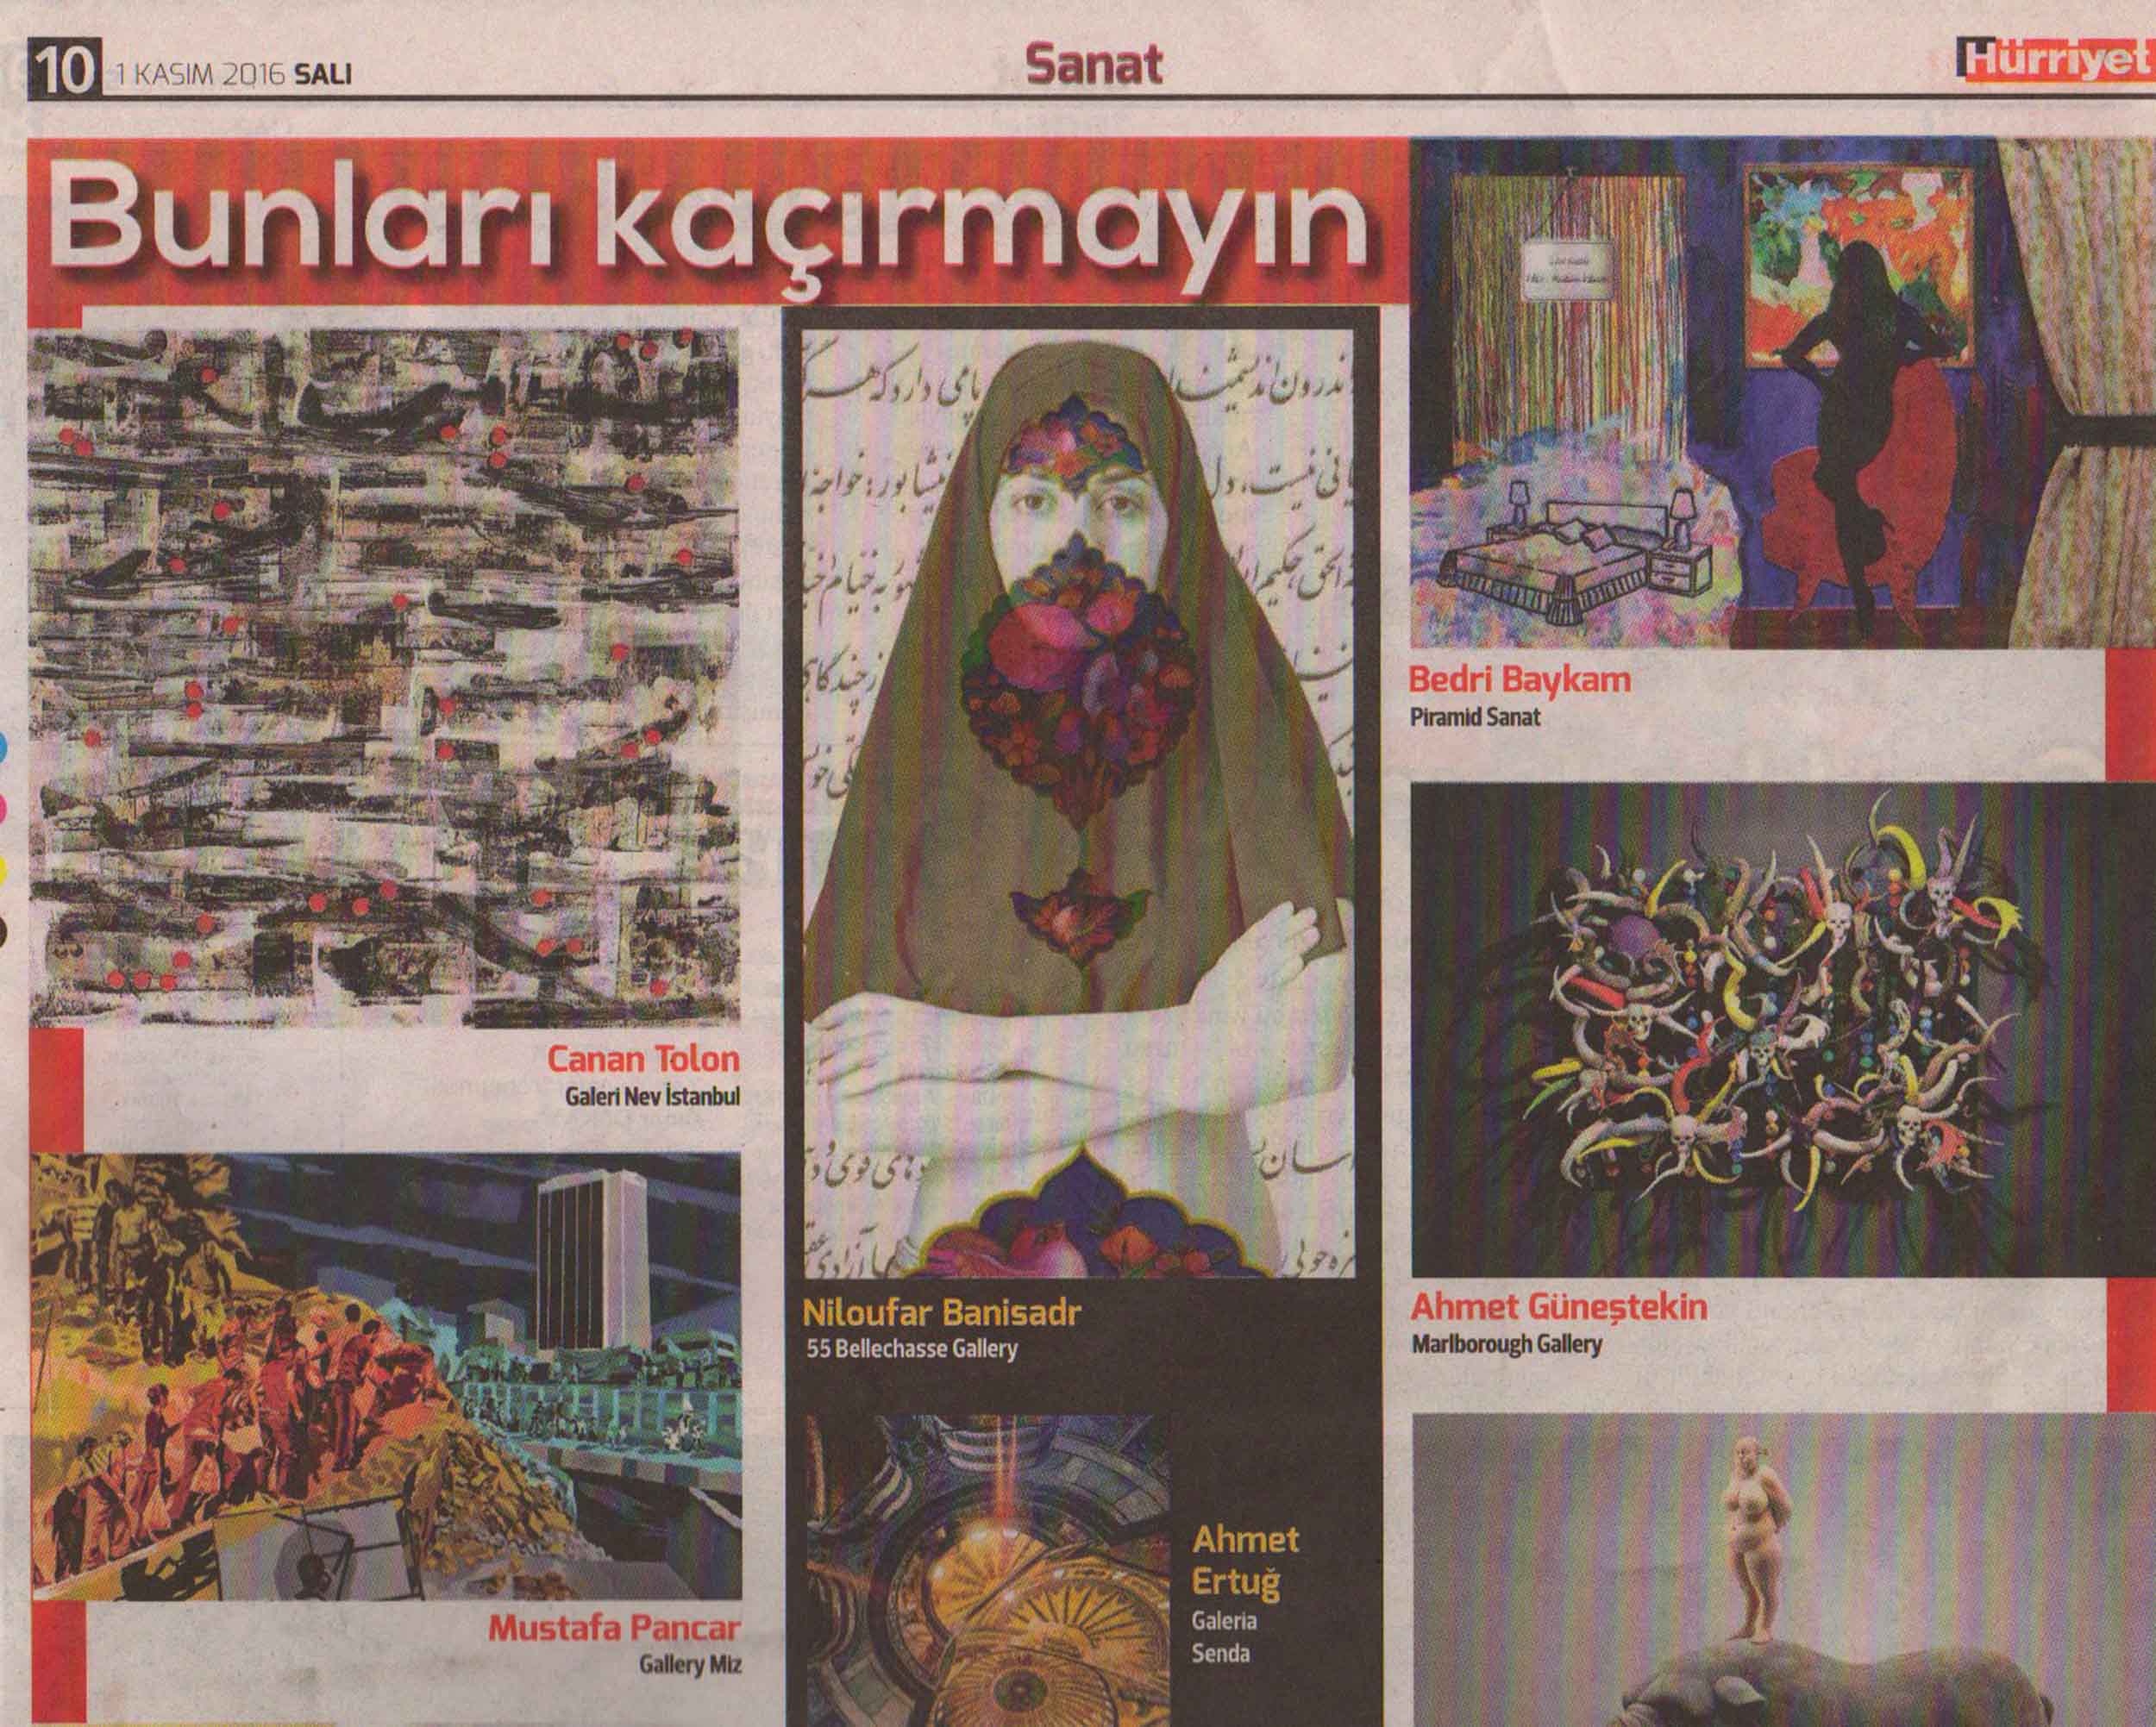 Niloufar Banisadr press article on Hurriyet Sanat